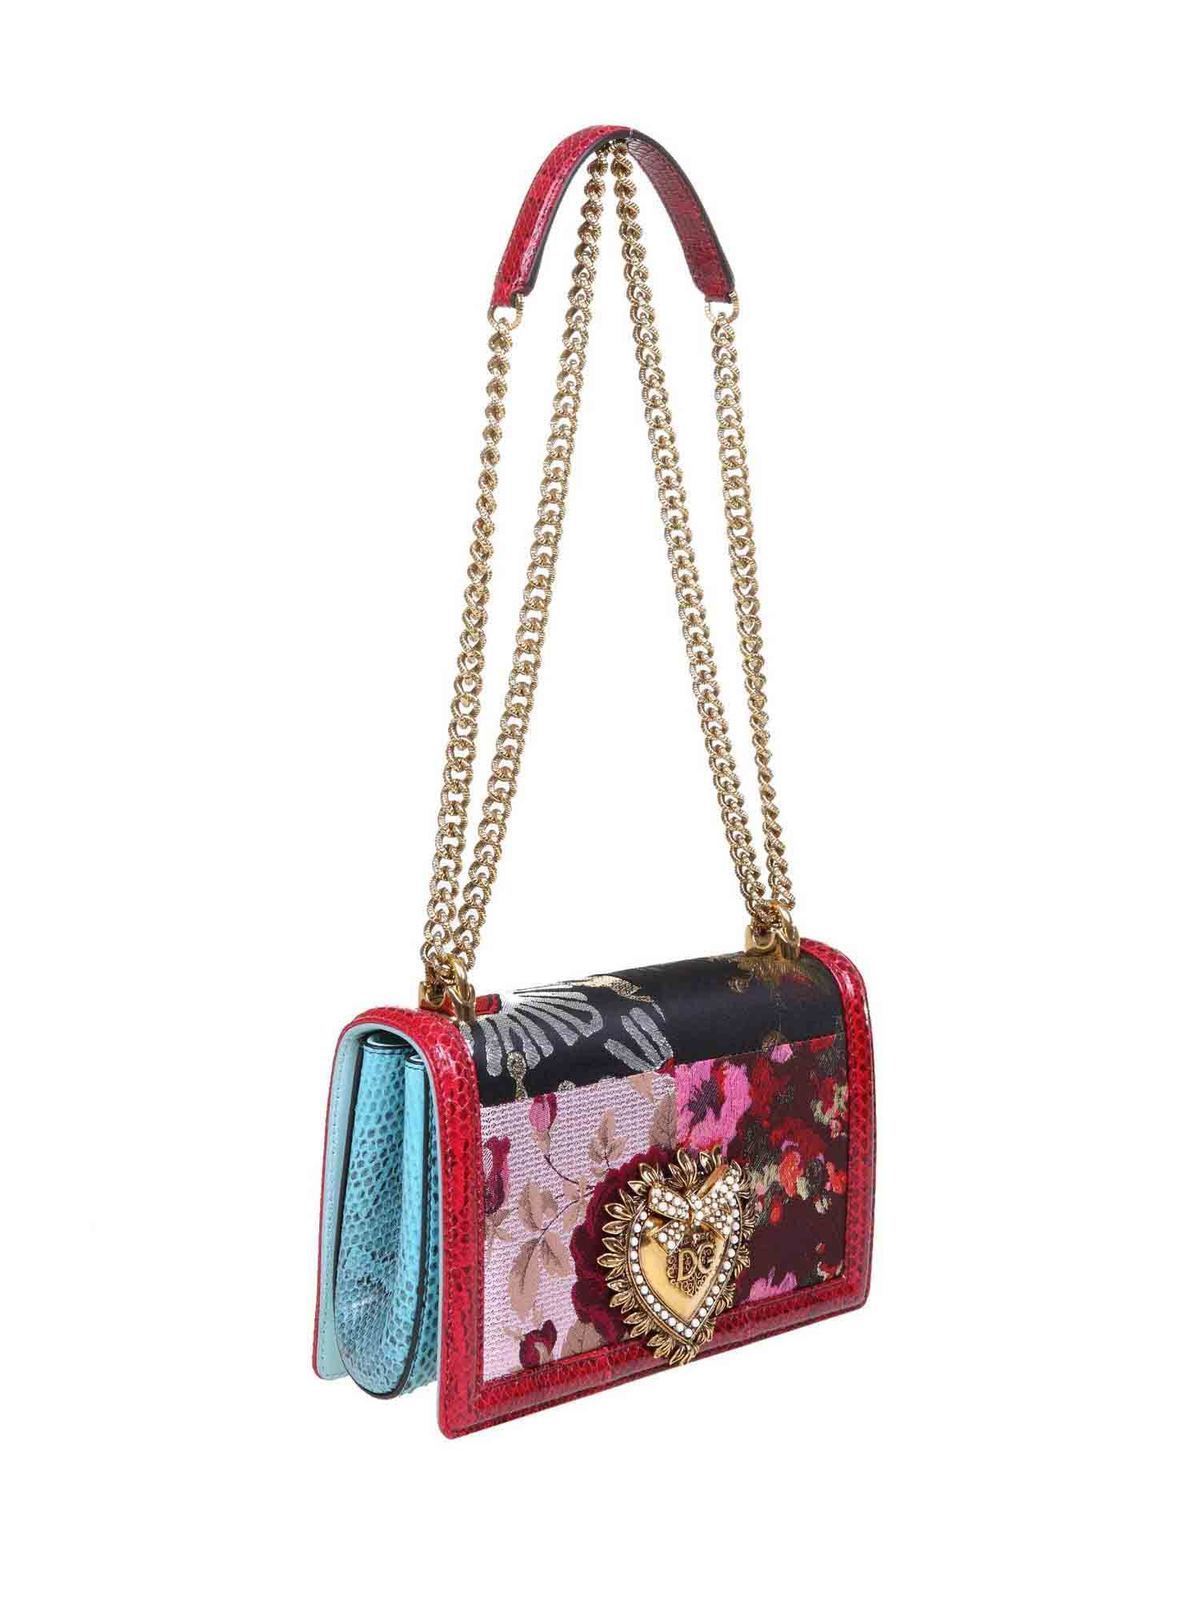 Dolce & Gabbana Medium Devotion Bag in Red